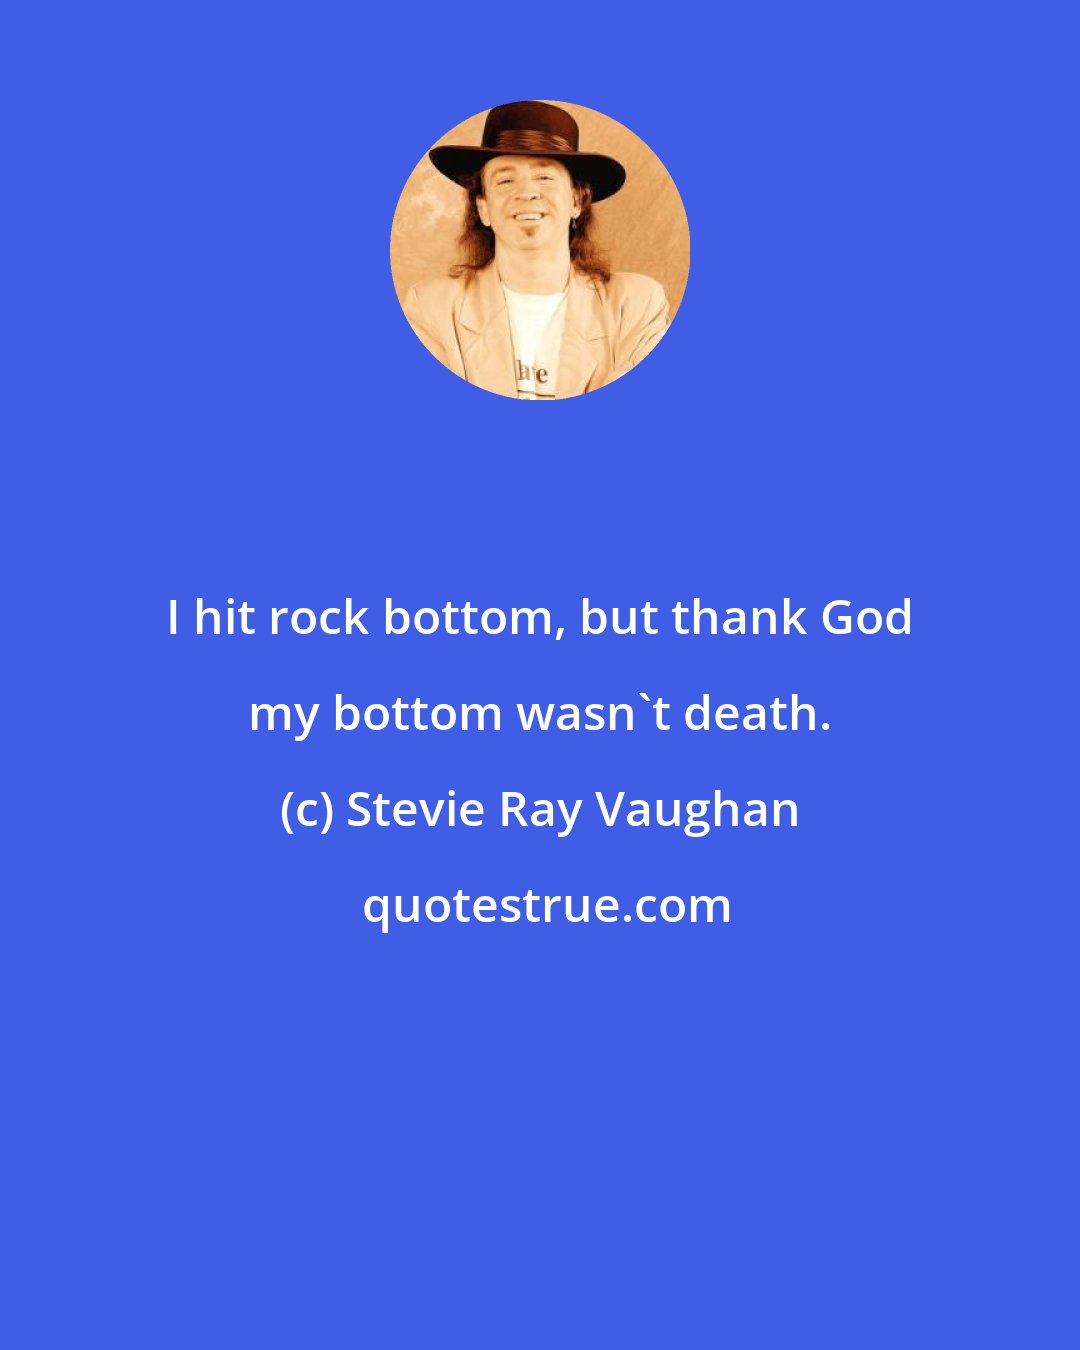 Stevie Ray Vaughan: I hit rock bottom, but thank God my bottom wasn't death.